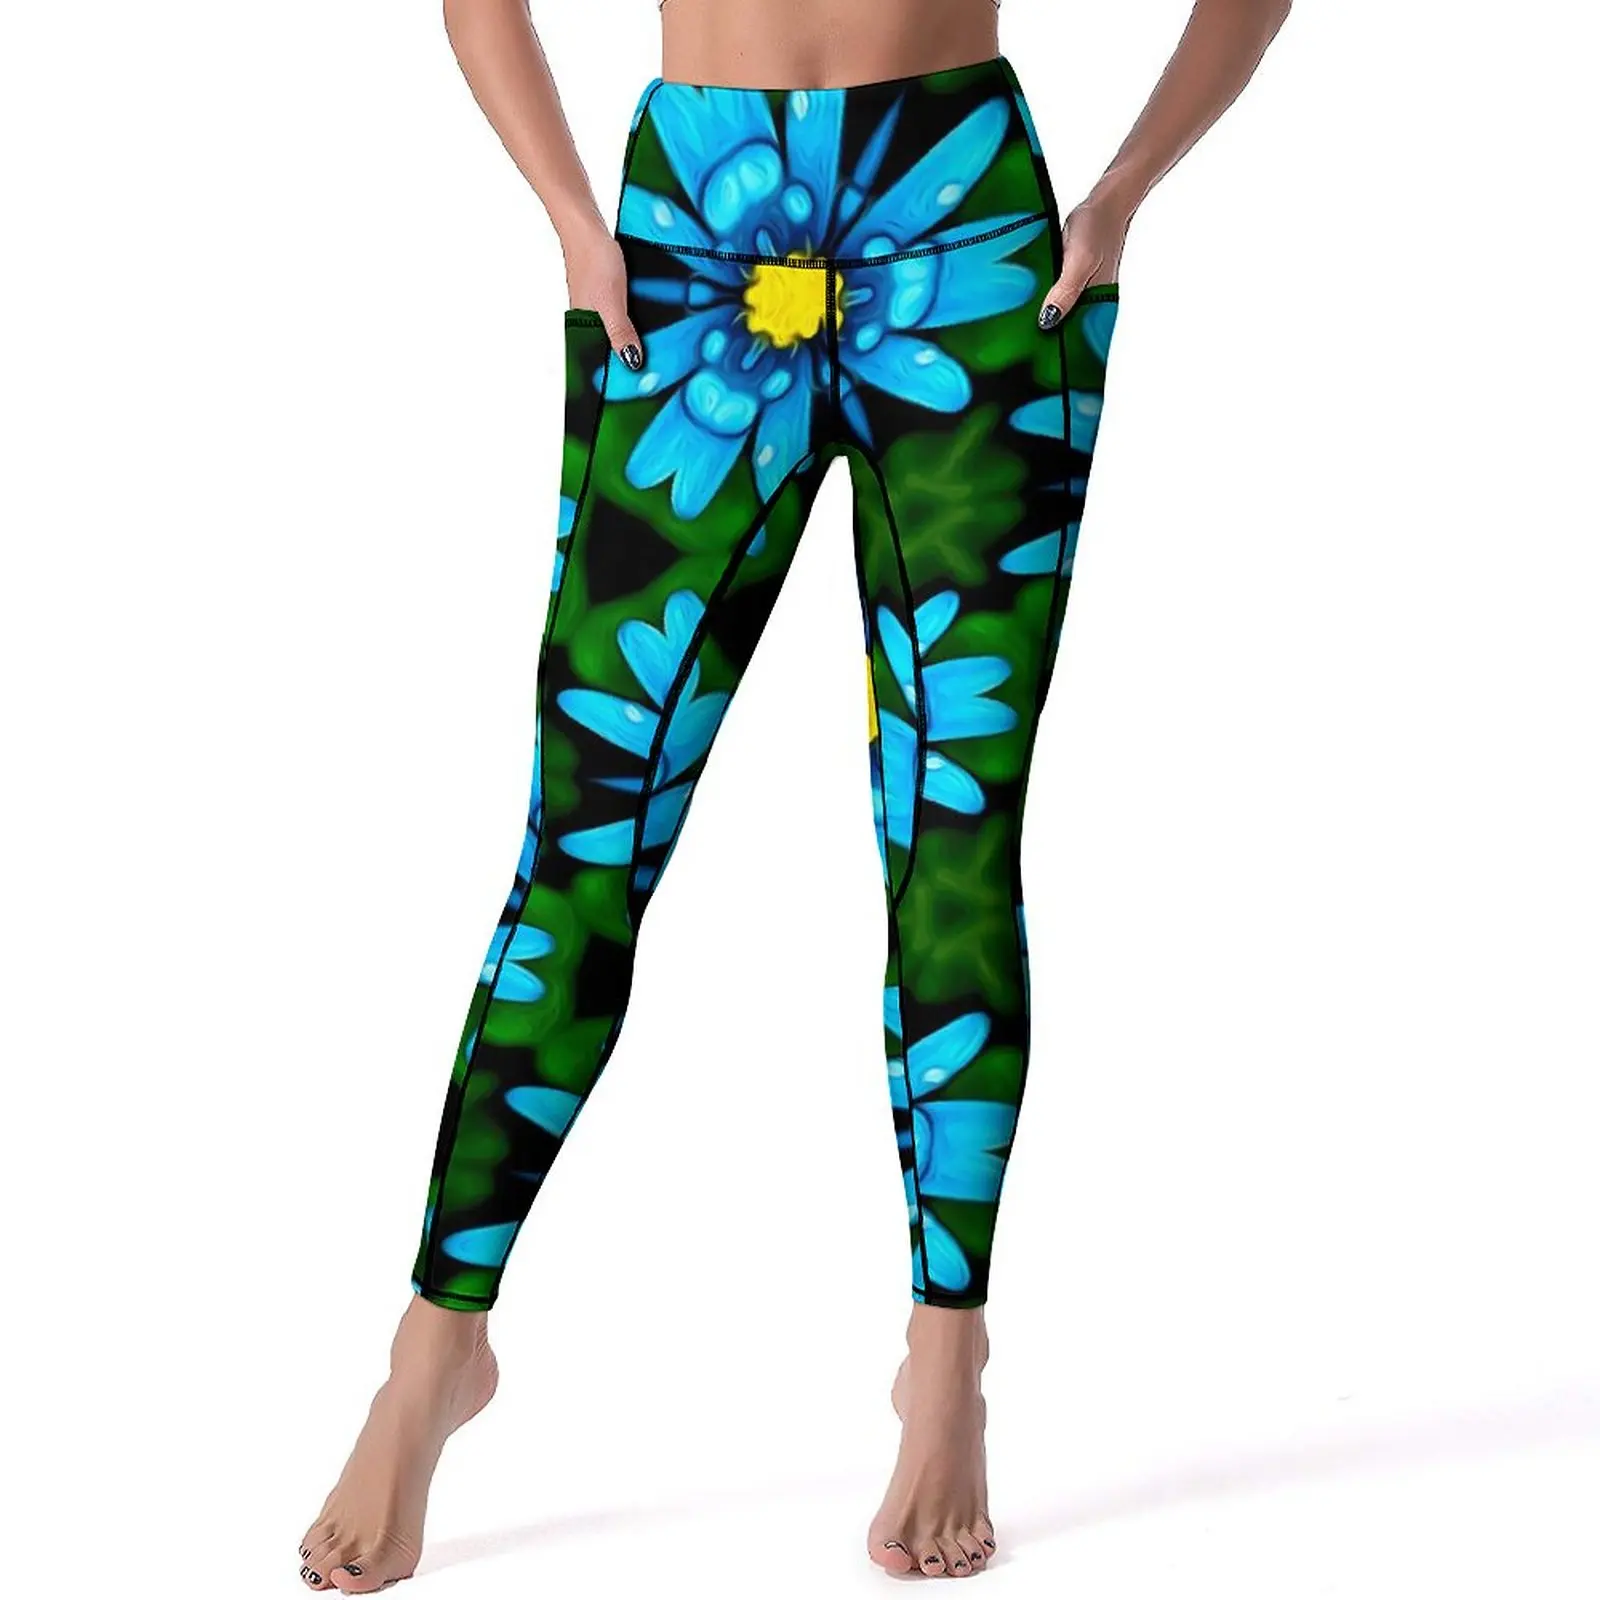 

Blue Daisy Leggings Beautiful Flower Print Fitness Running Yoga Pants High Waist Funny Leggins Elastic Graphic Sport Legging